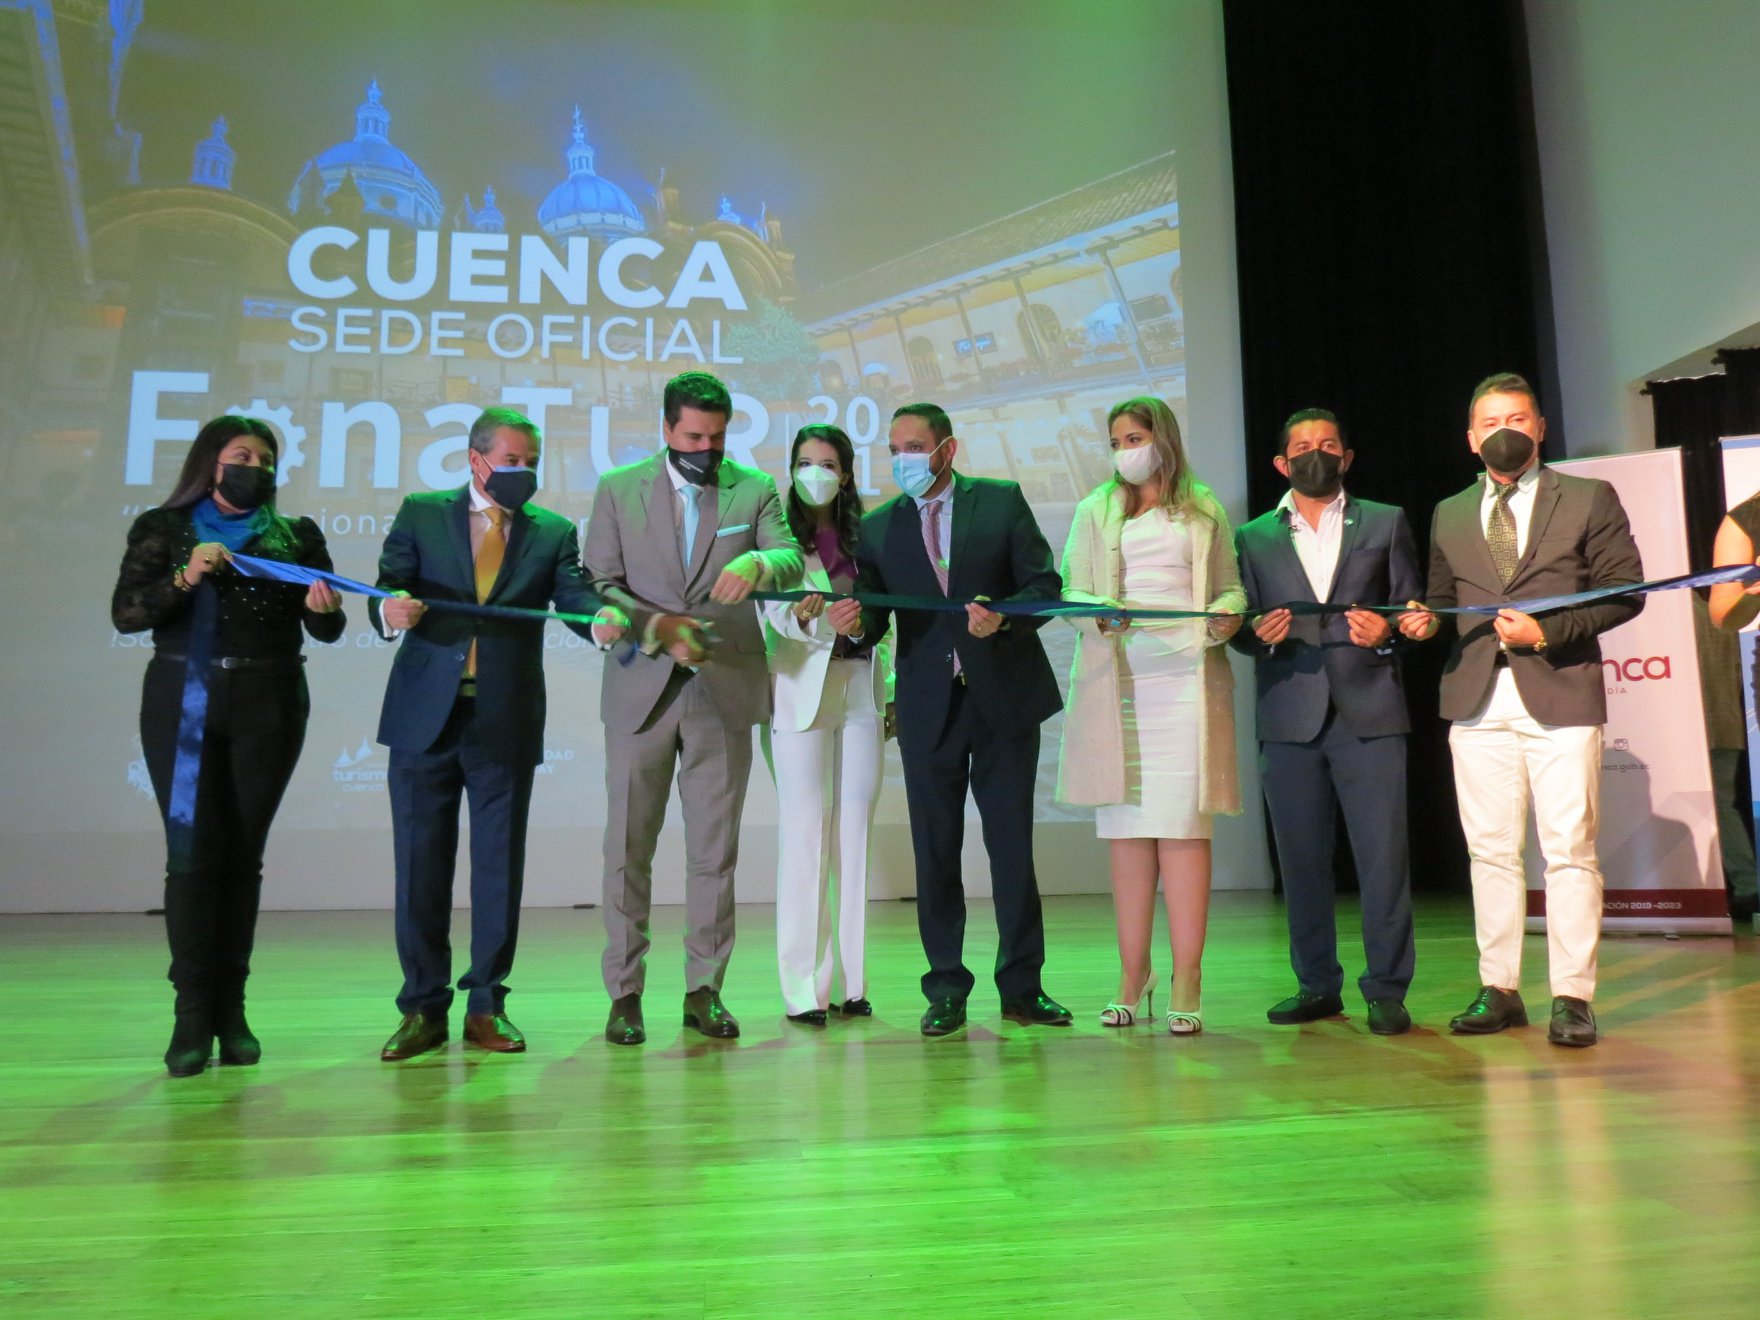 Forum to promote Cuenca as a biosecure tourist destination